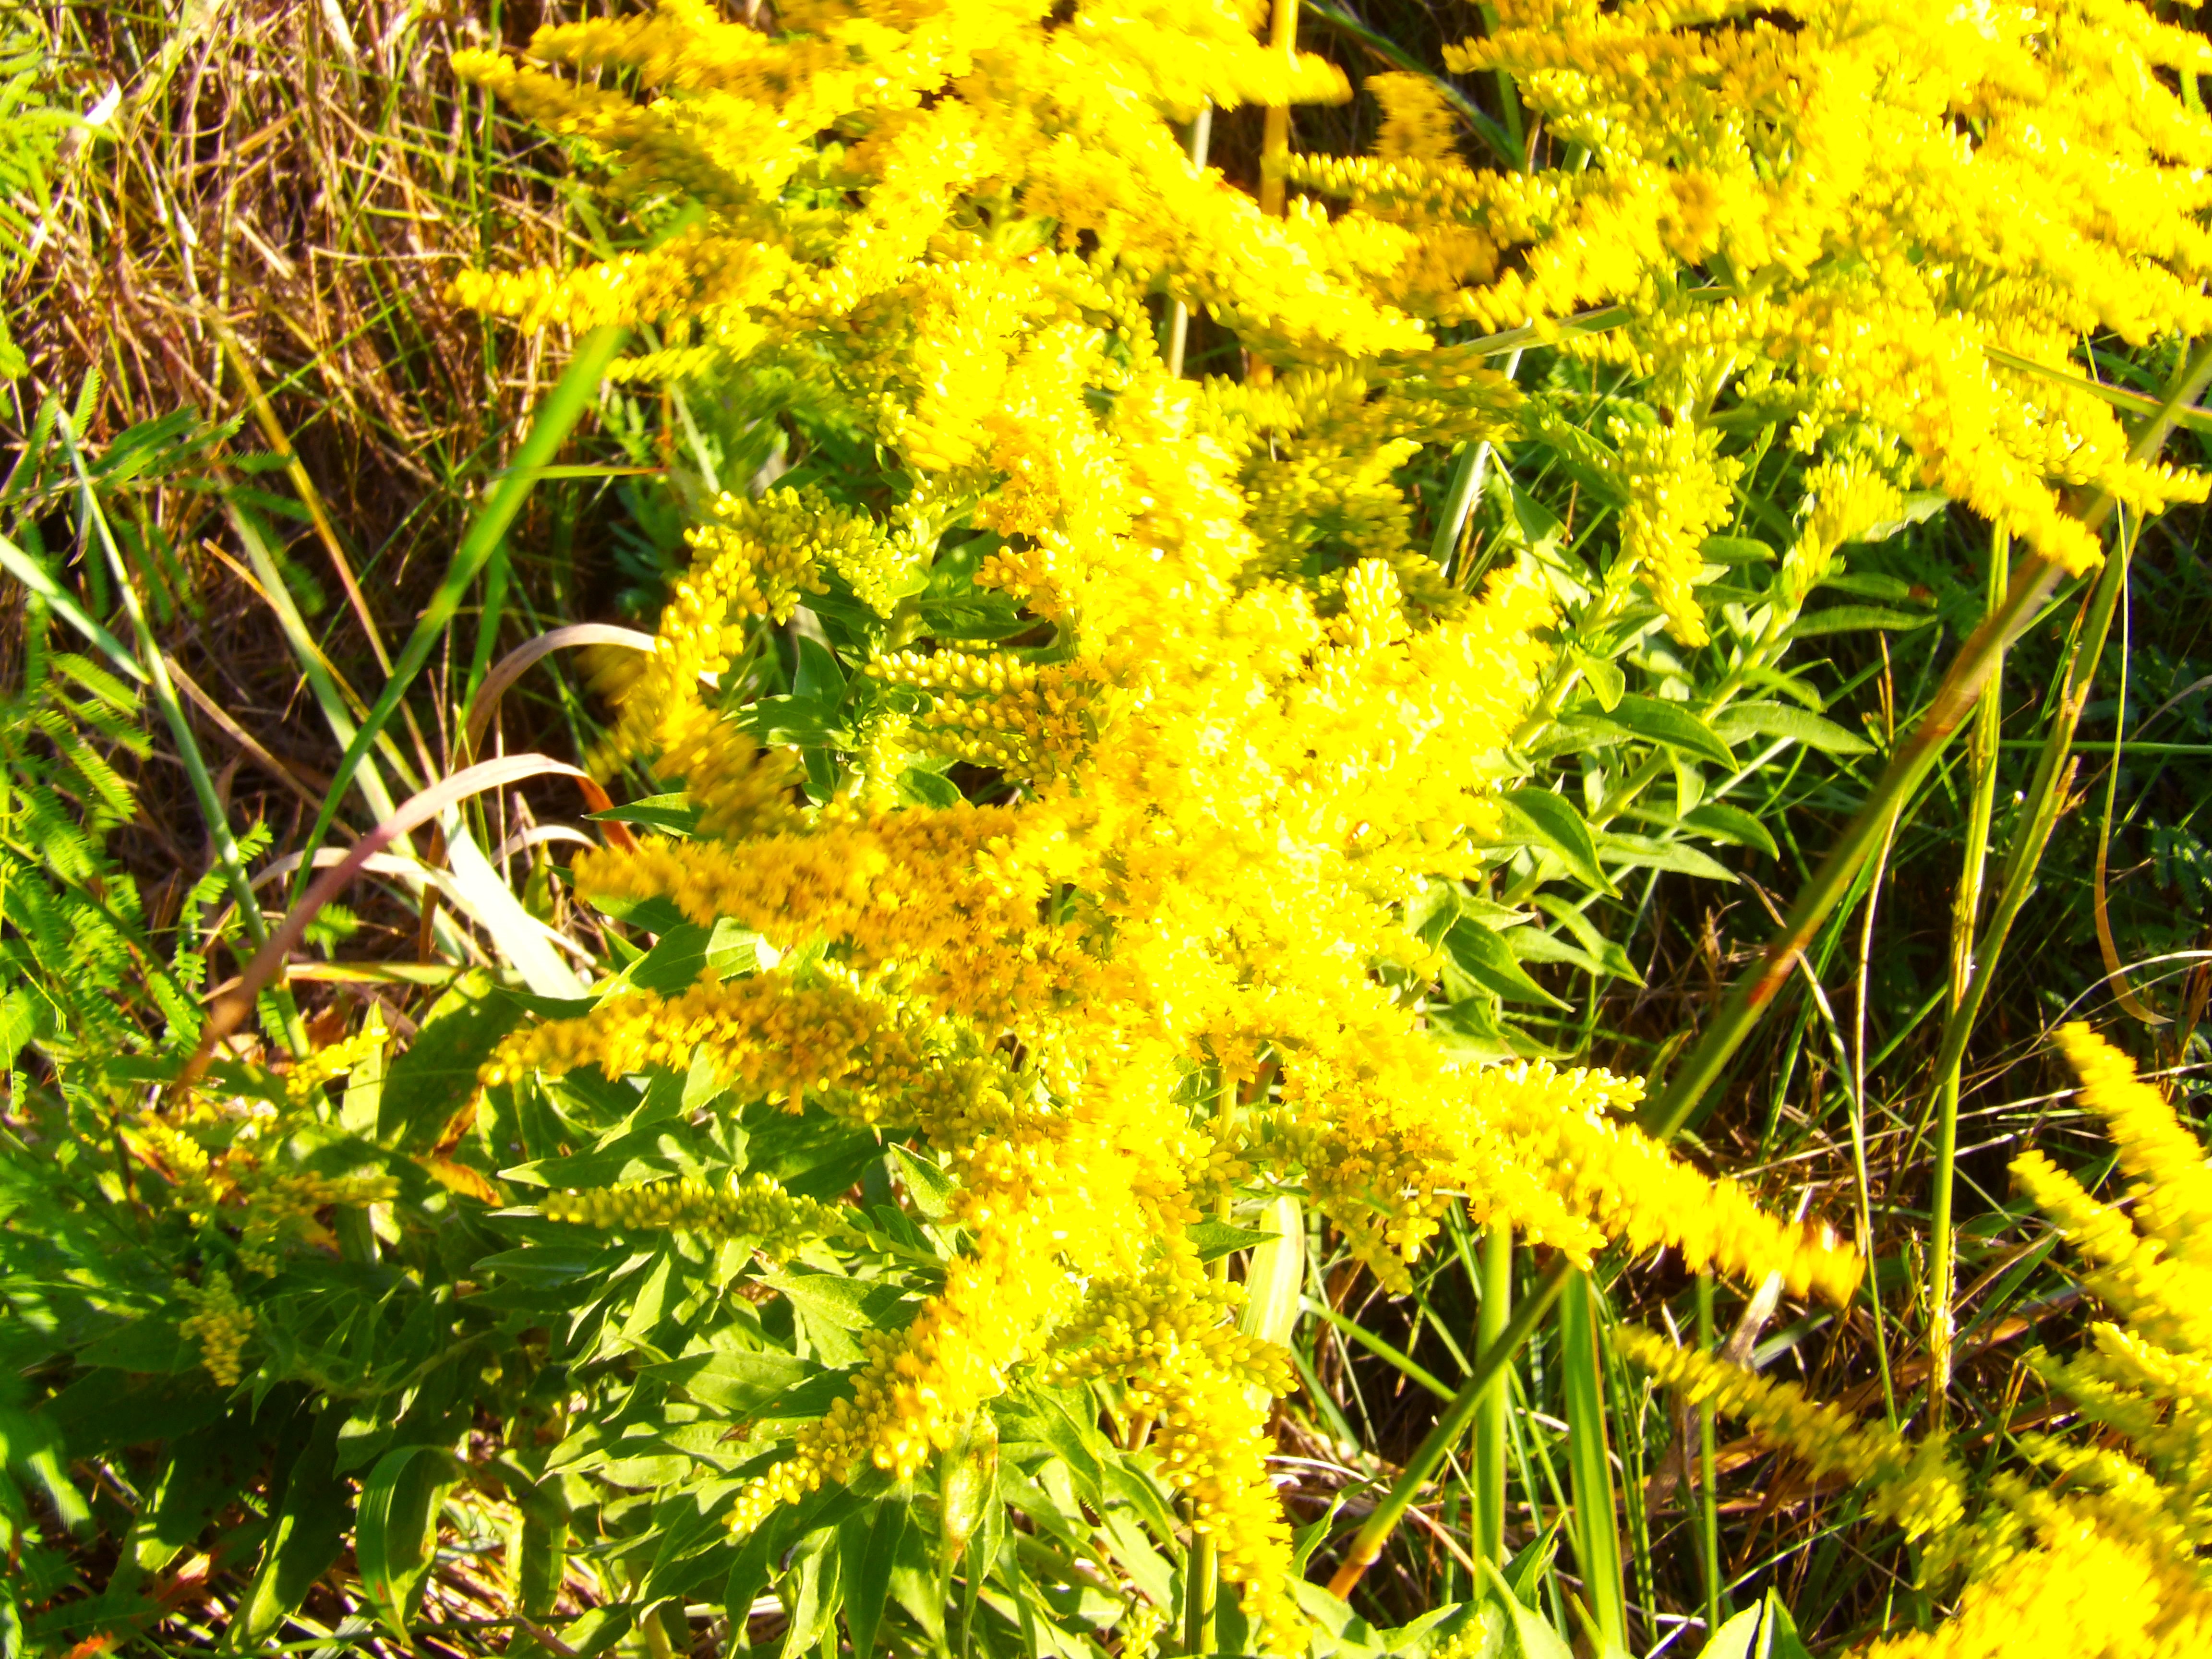 Bright Day Shot of Vibrant Golden Wild Flowers